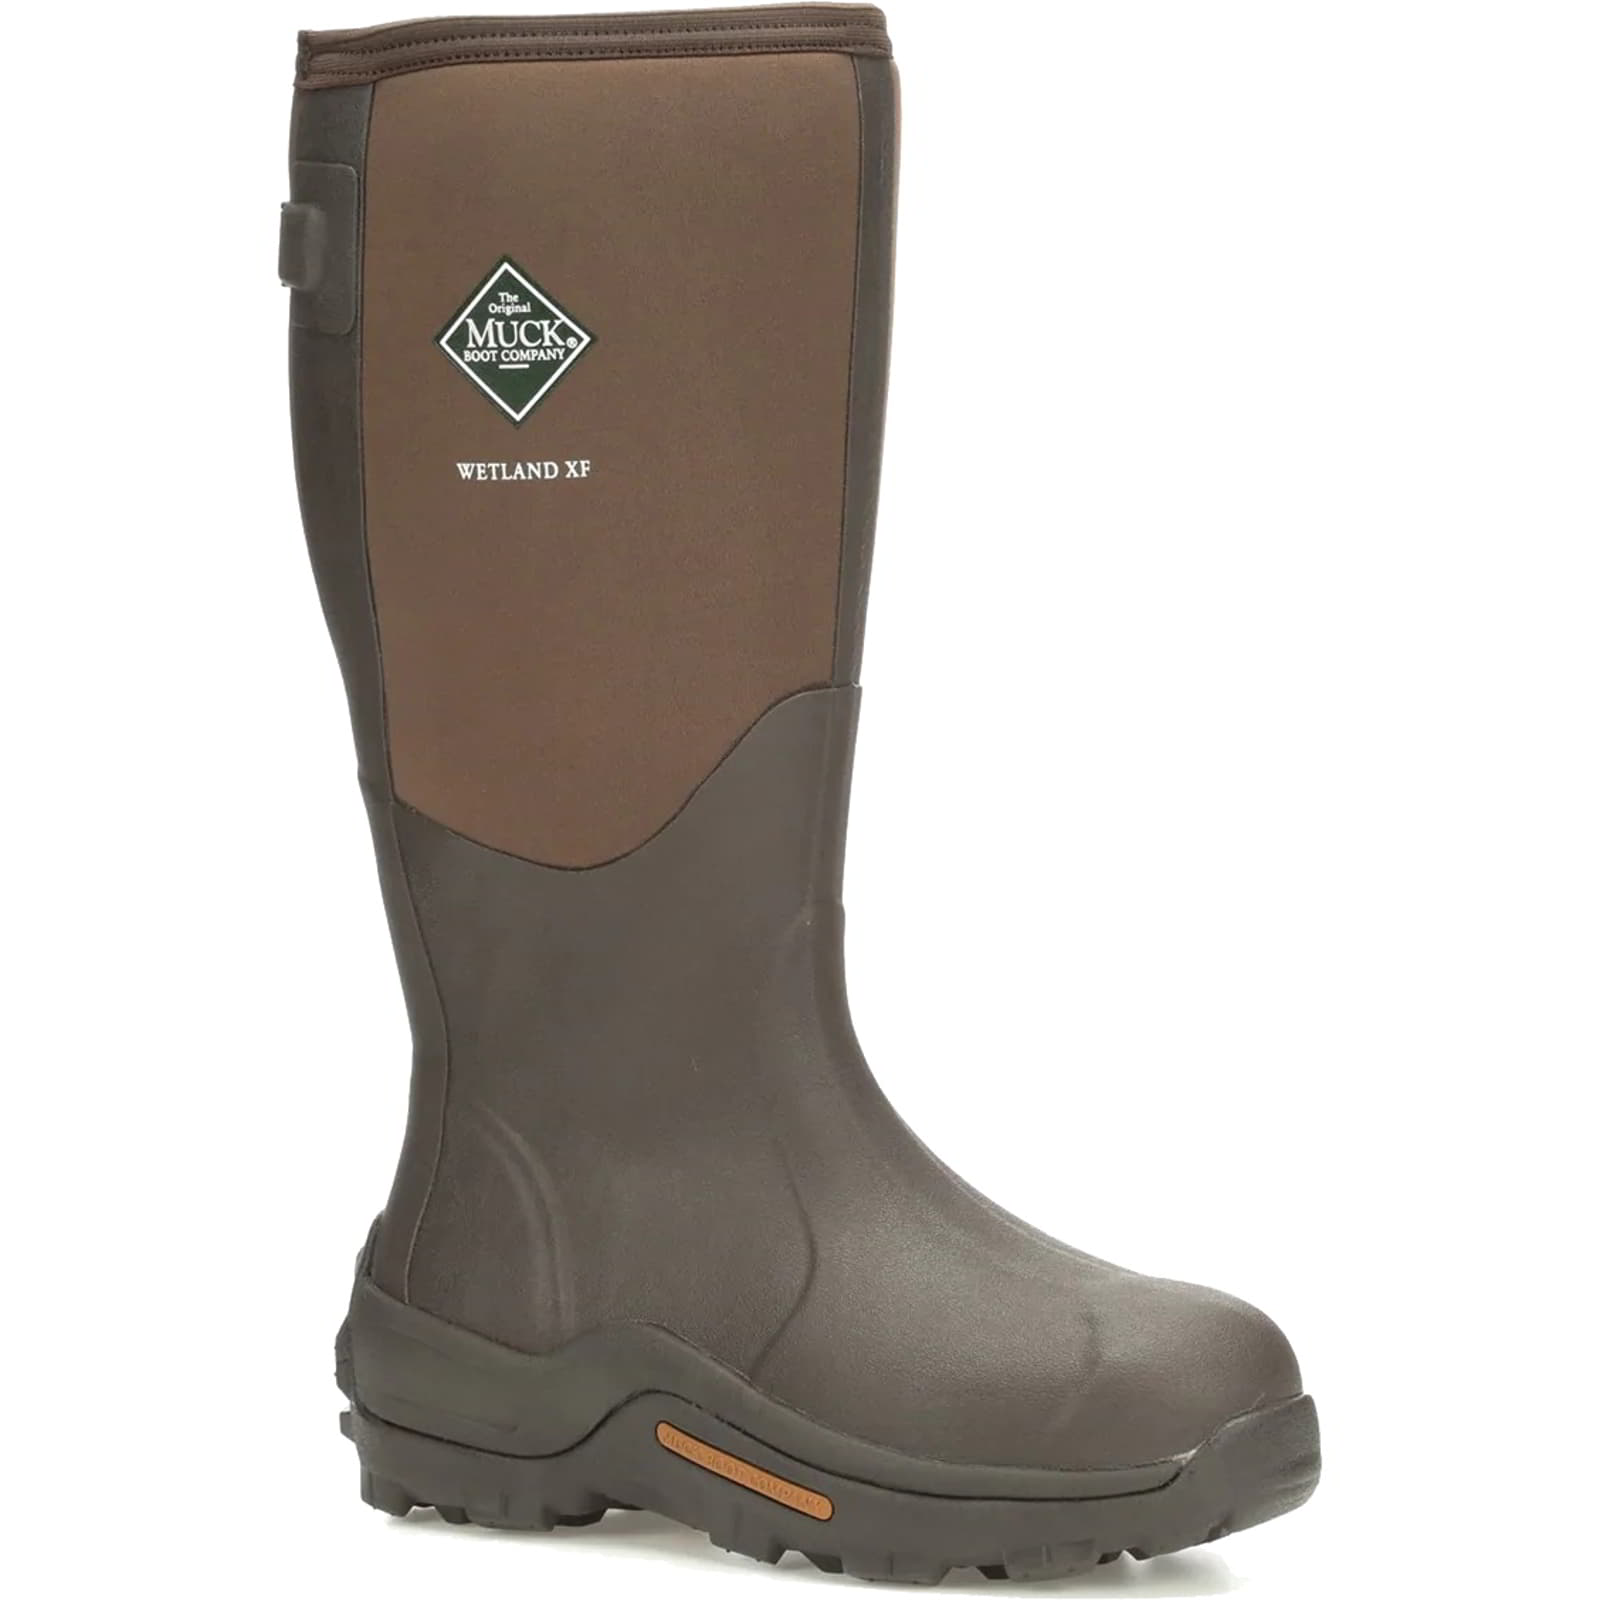 Muck Boots Men's Wetland XF Wide Calf Tall Adjustable Wellingtons Boots - UK 7 / EU 41